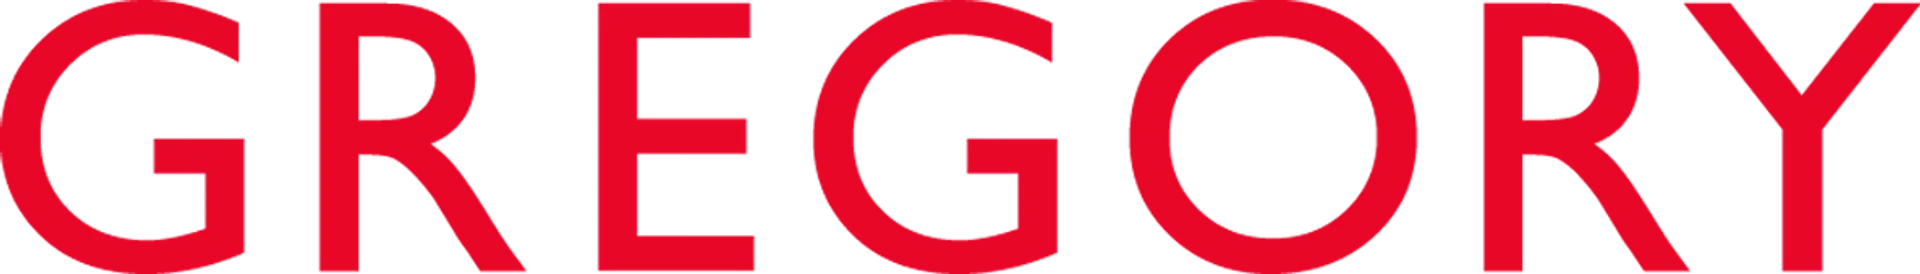 GREGORY logo